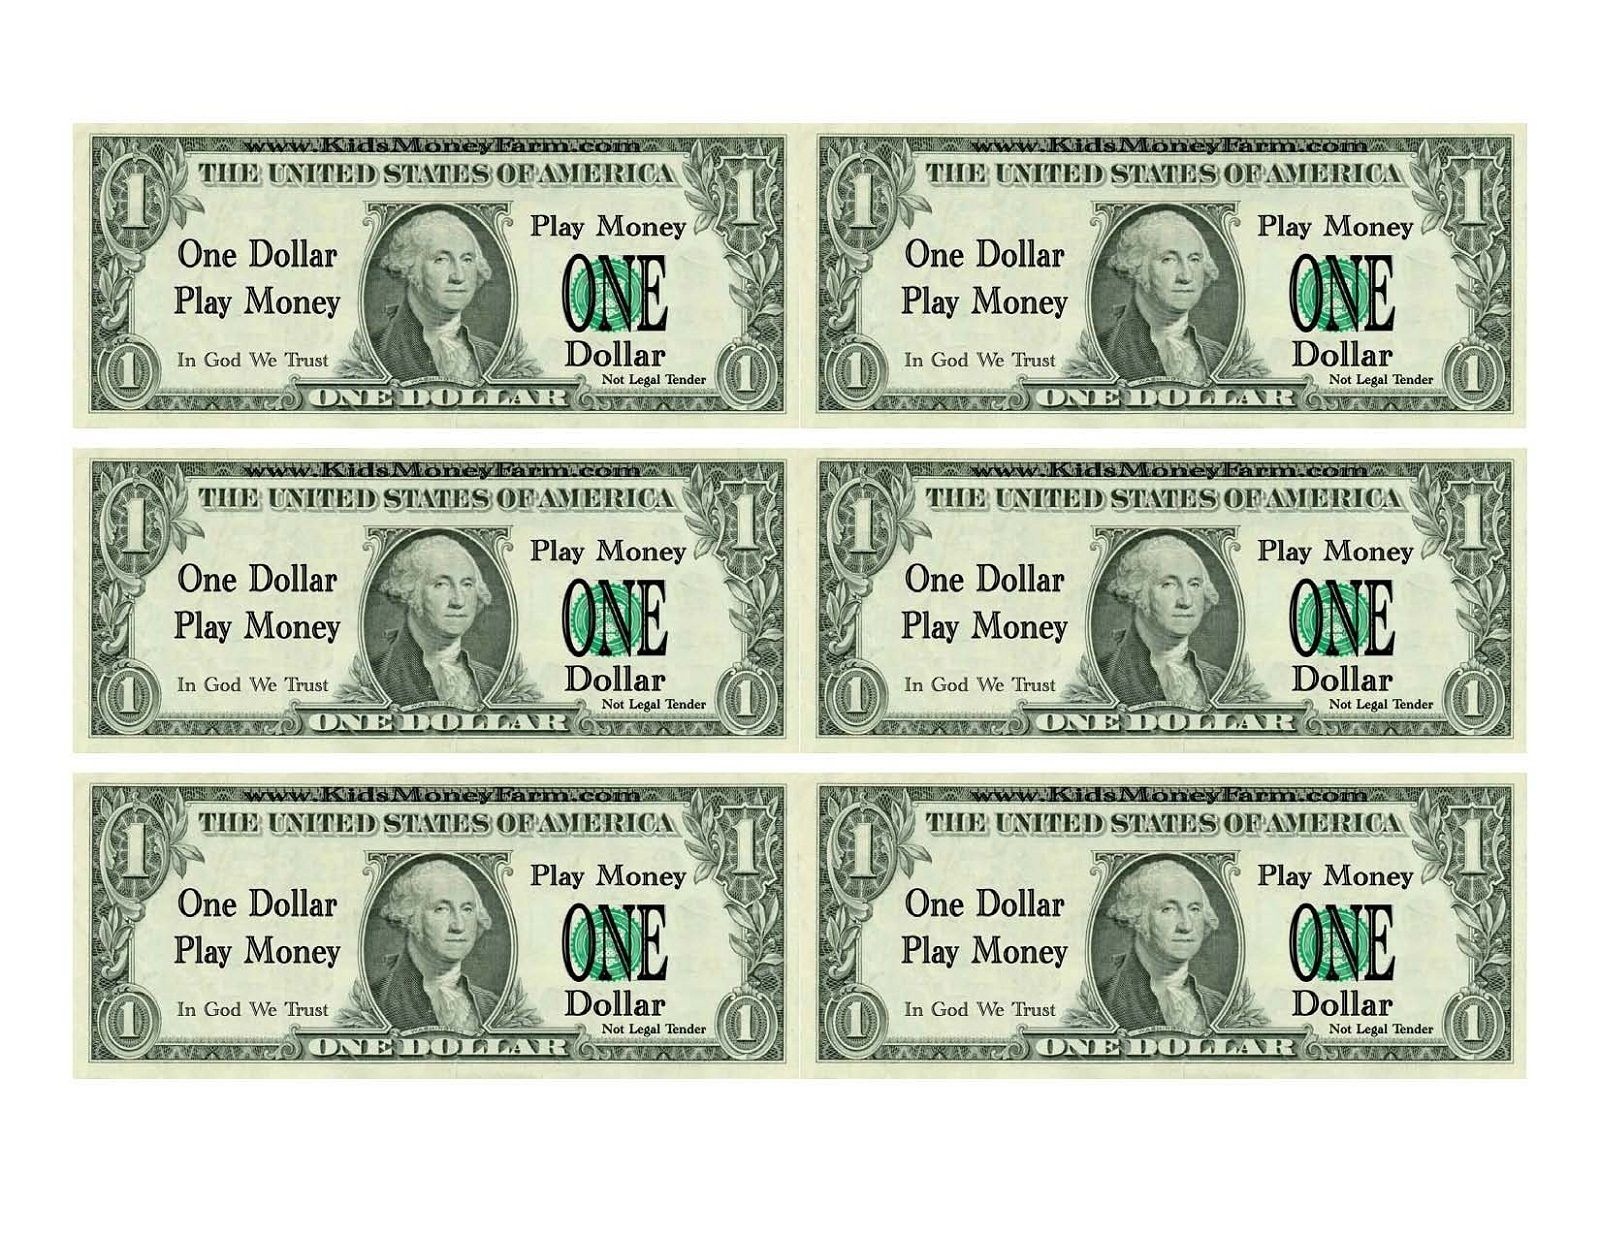 Dollar Bill Template Free. Royalty Free Stock Photos Image 1247348